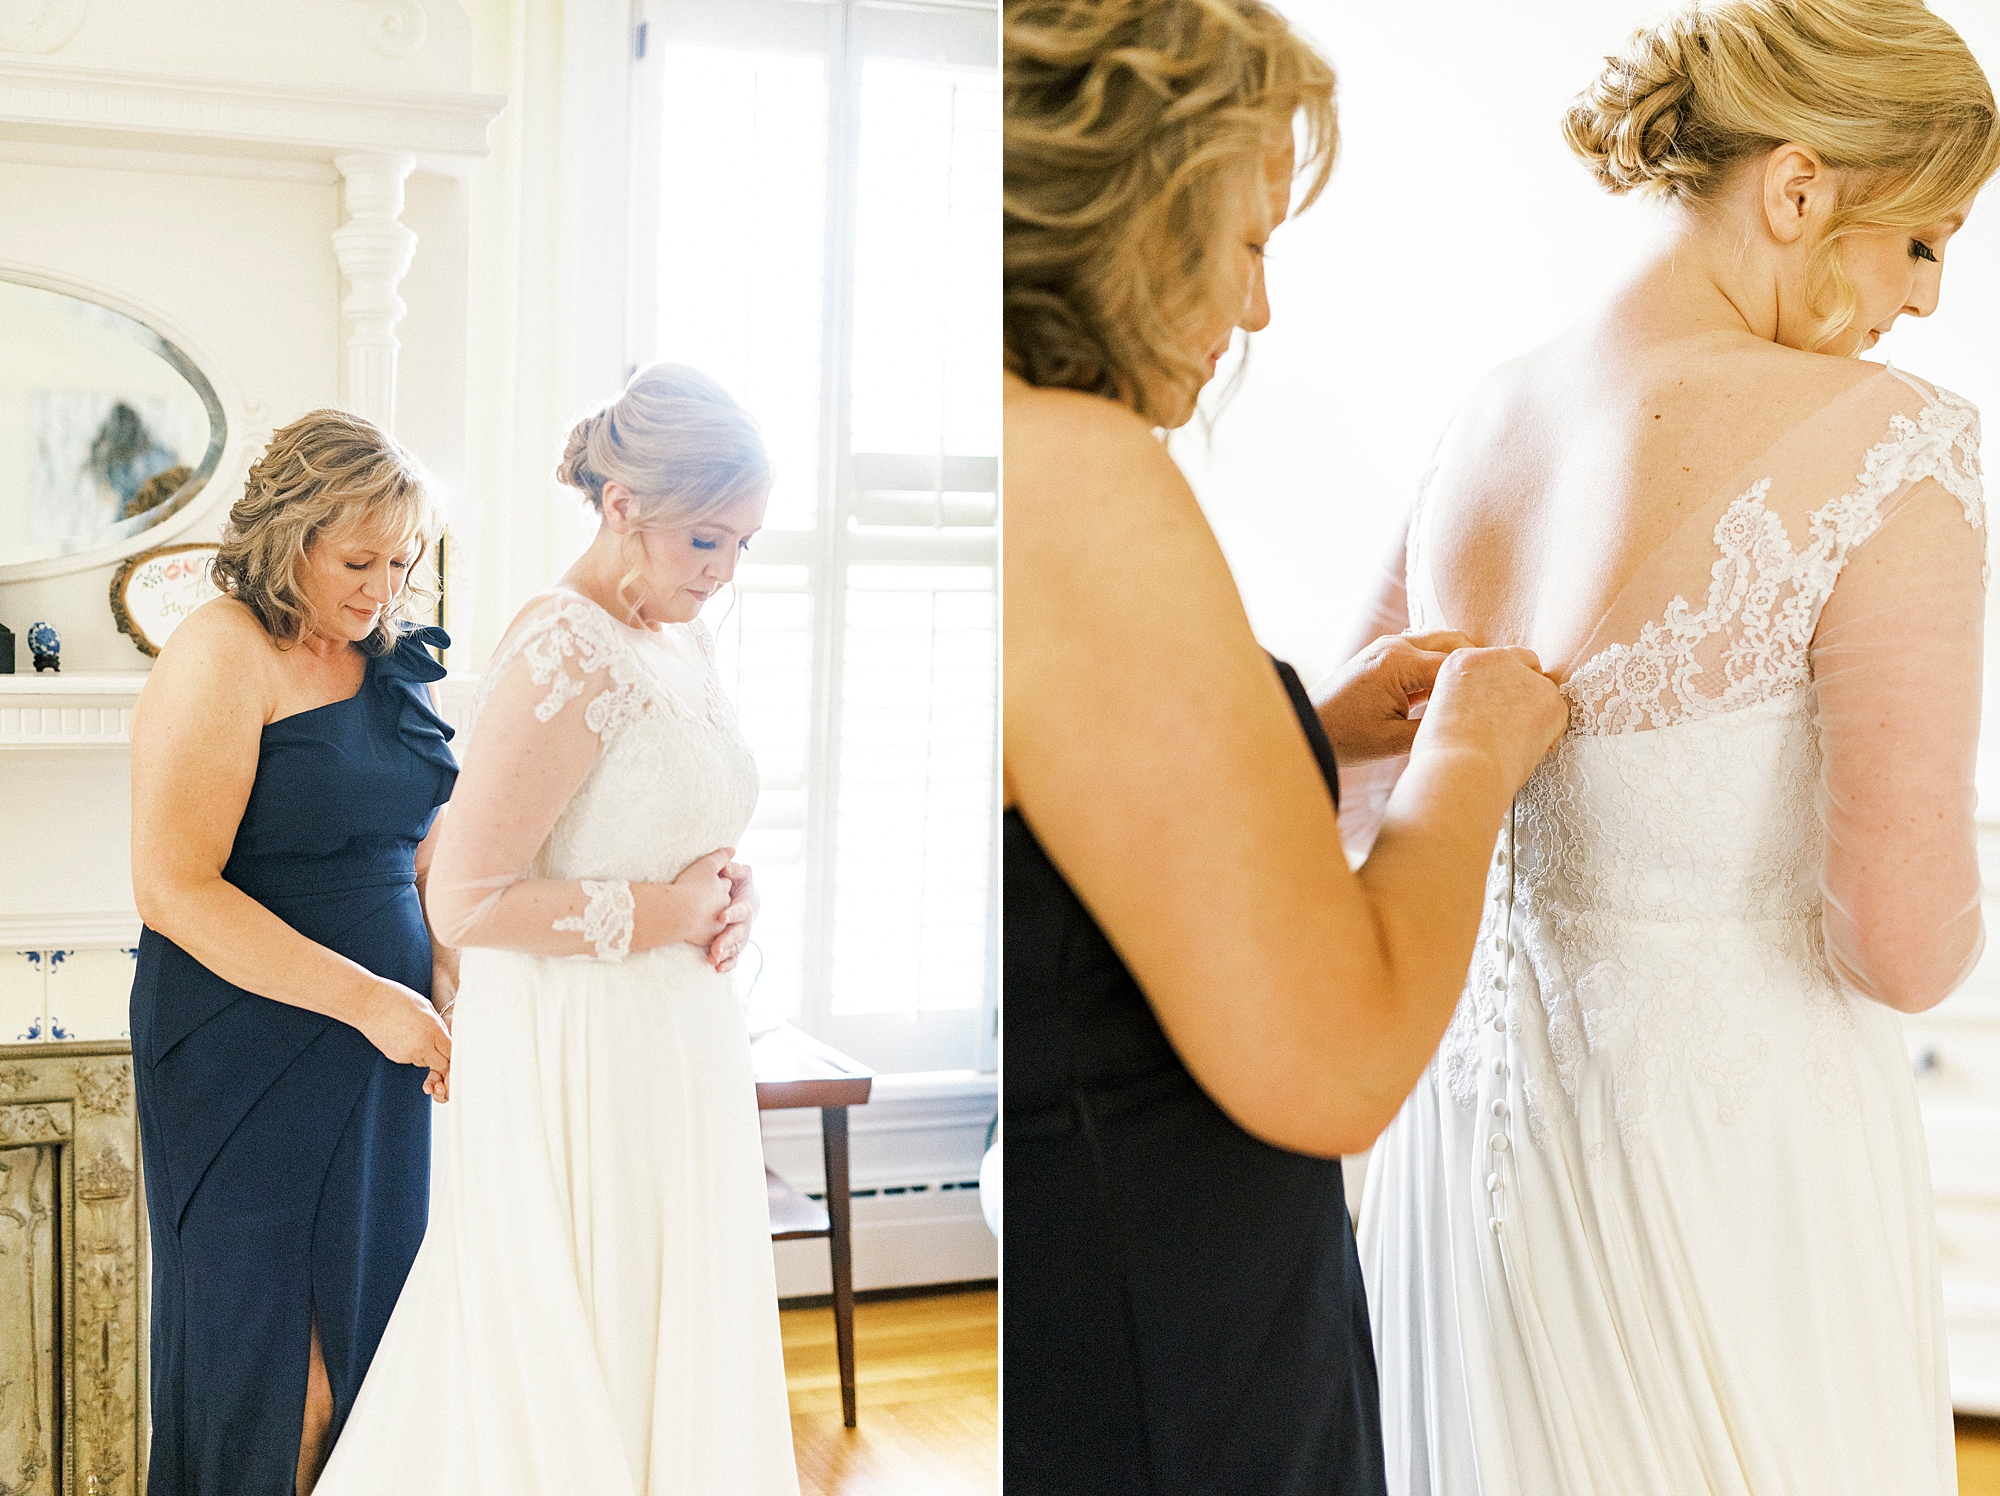 mother helps bride into wedding dress before spring wedding